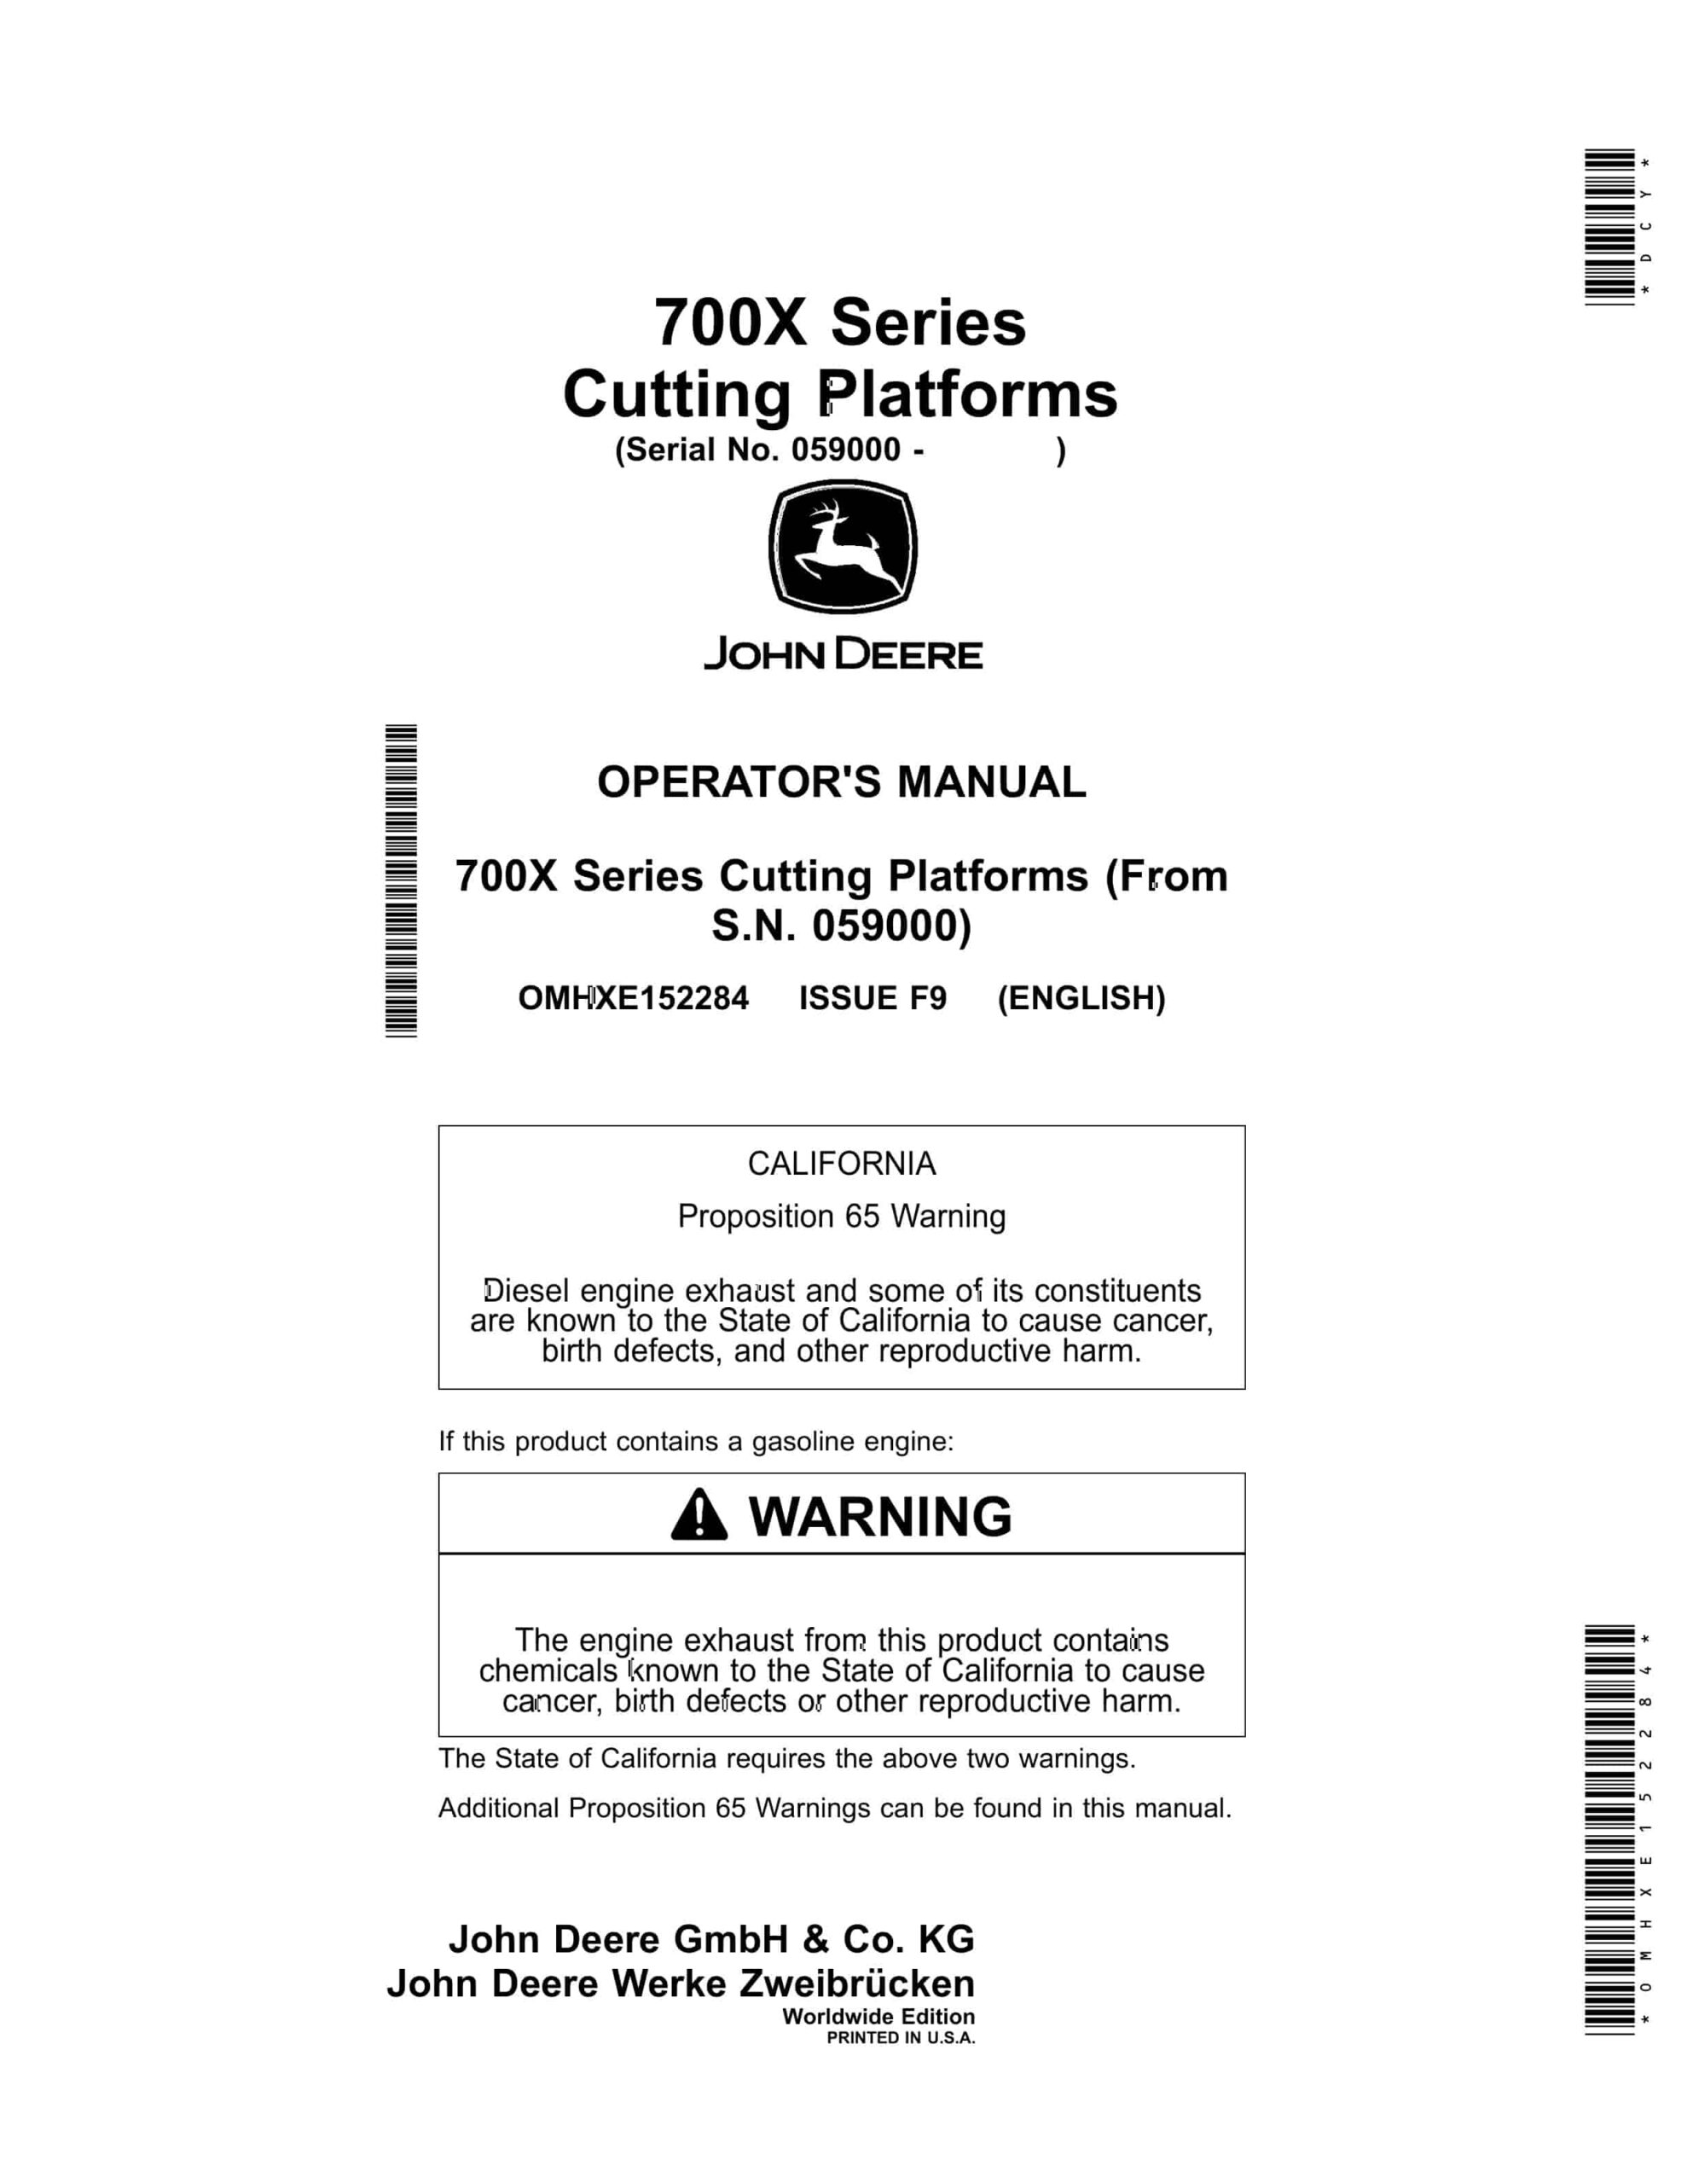 John Deere 700X Series Cutting Platform Operator Manual OMHXE152284-1